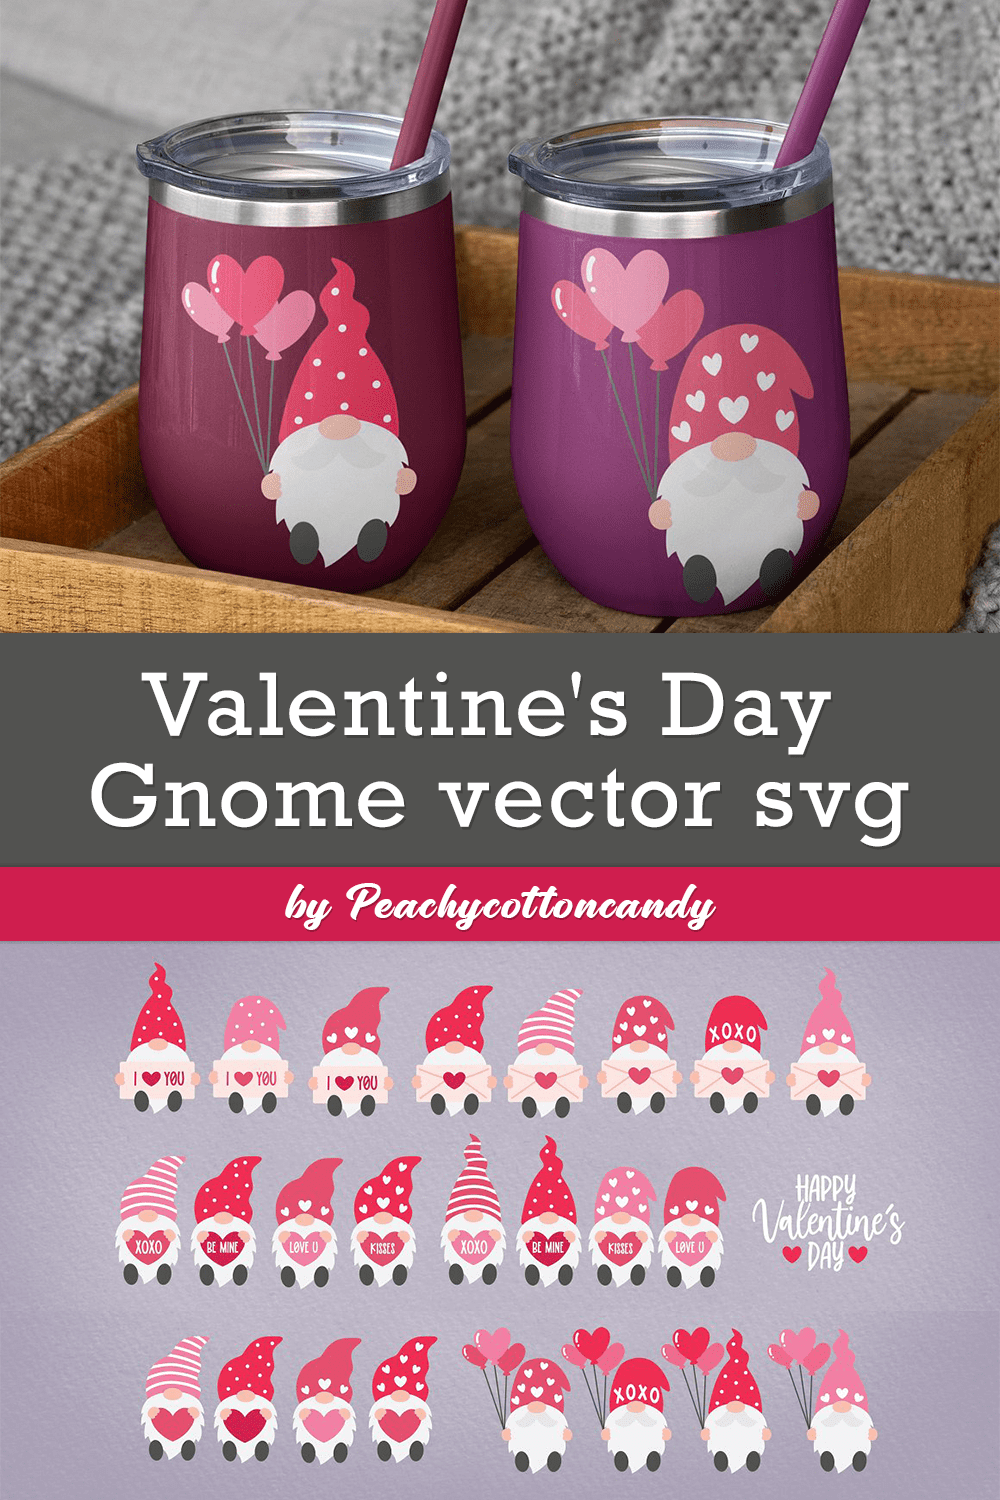 Valentine's Day Gnome Vector Svg - Pinterest.